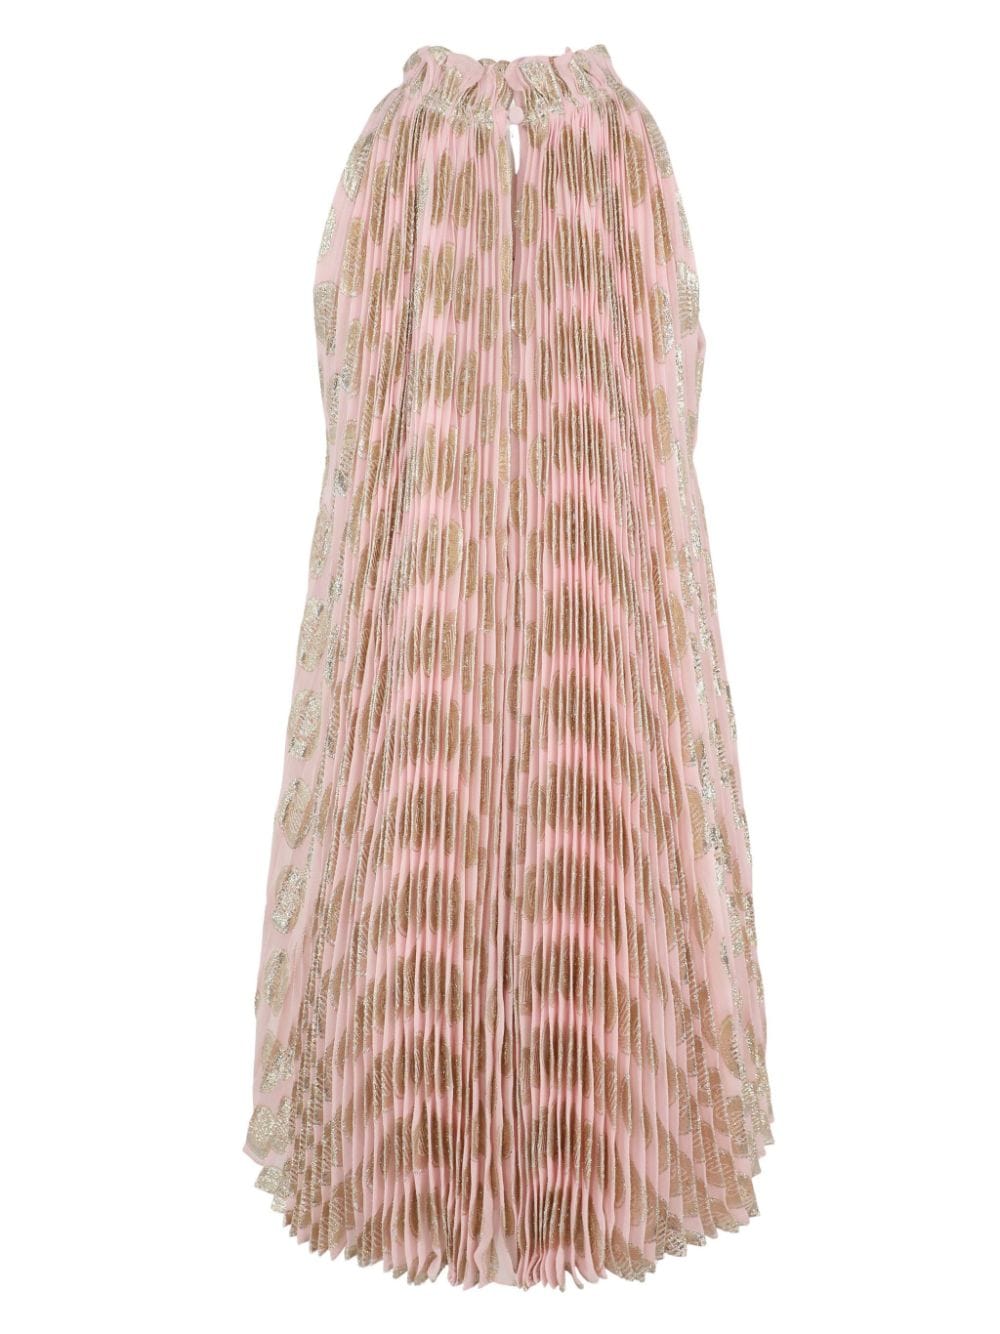 Alexis Isatta murex shell-print minidress - Roze